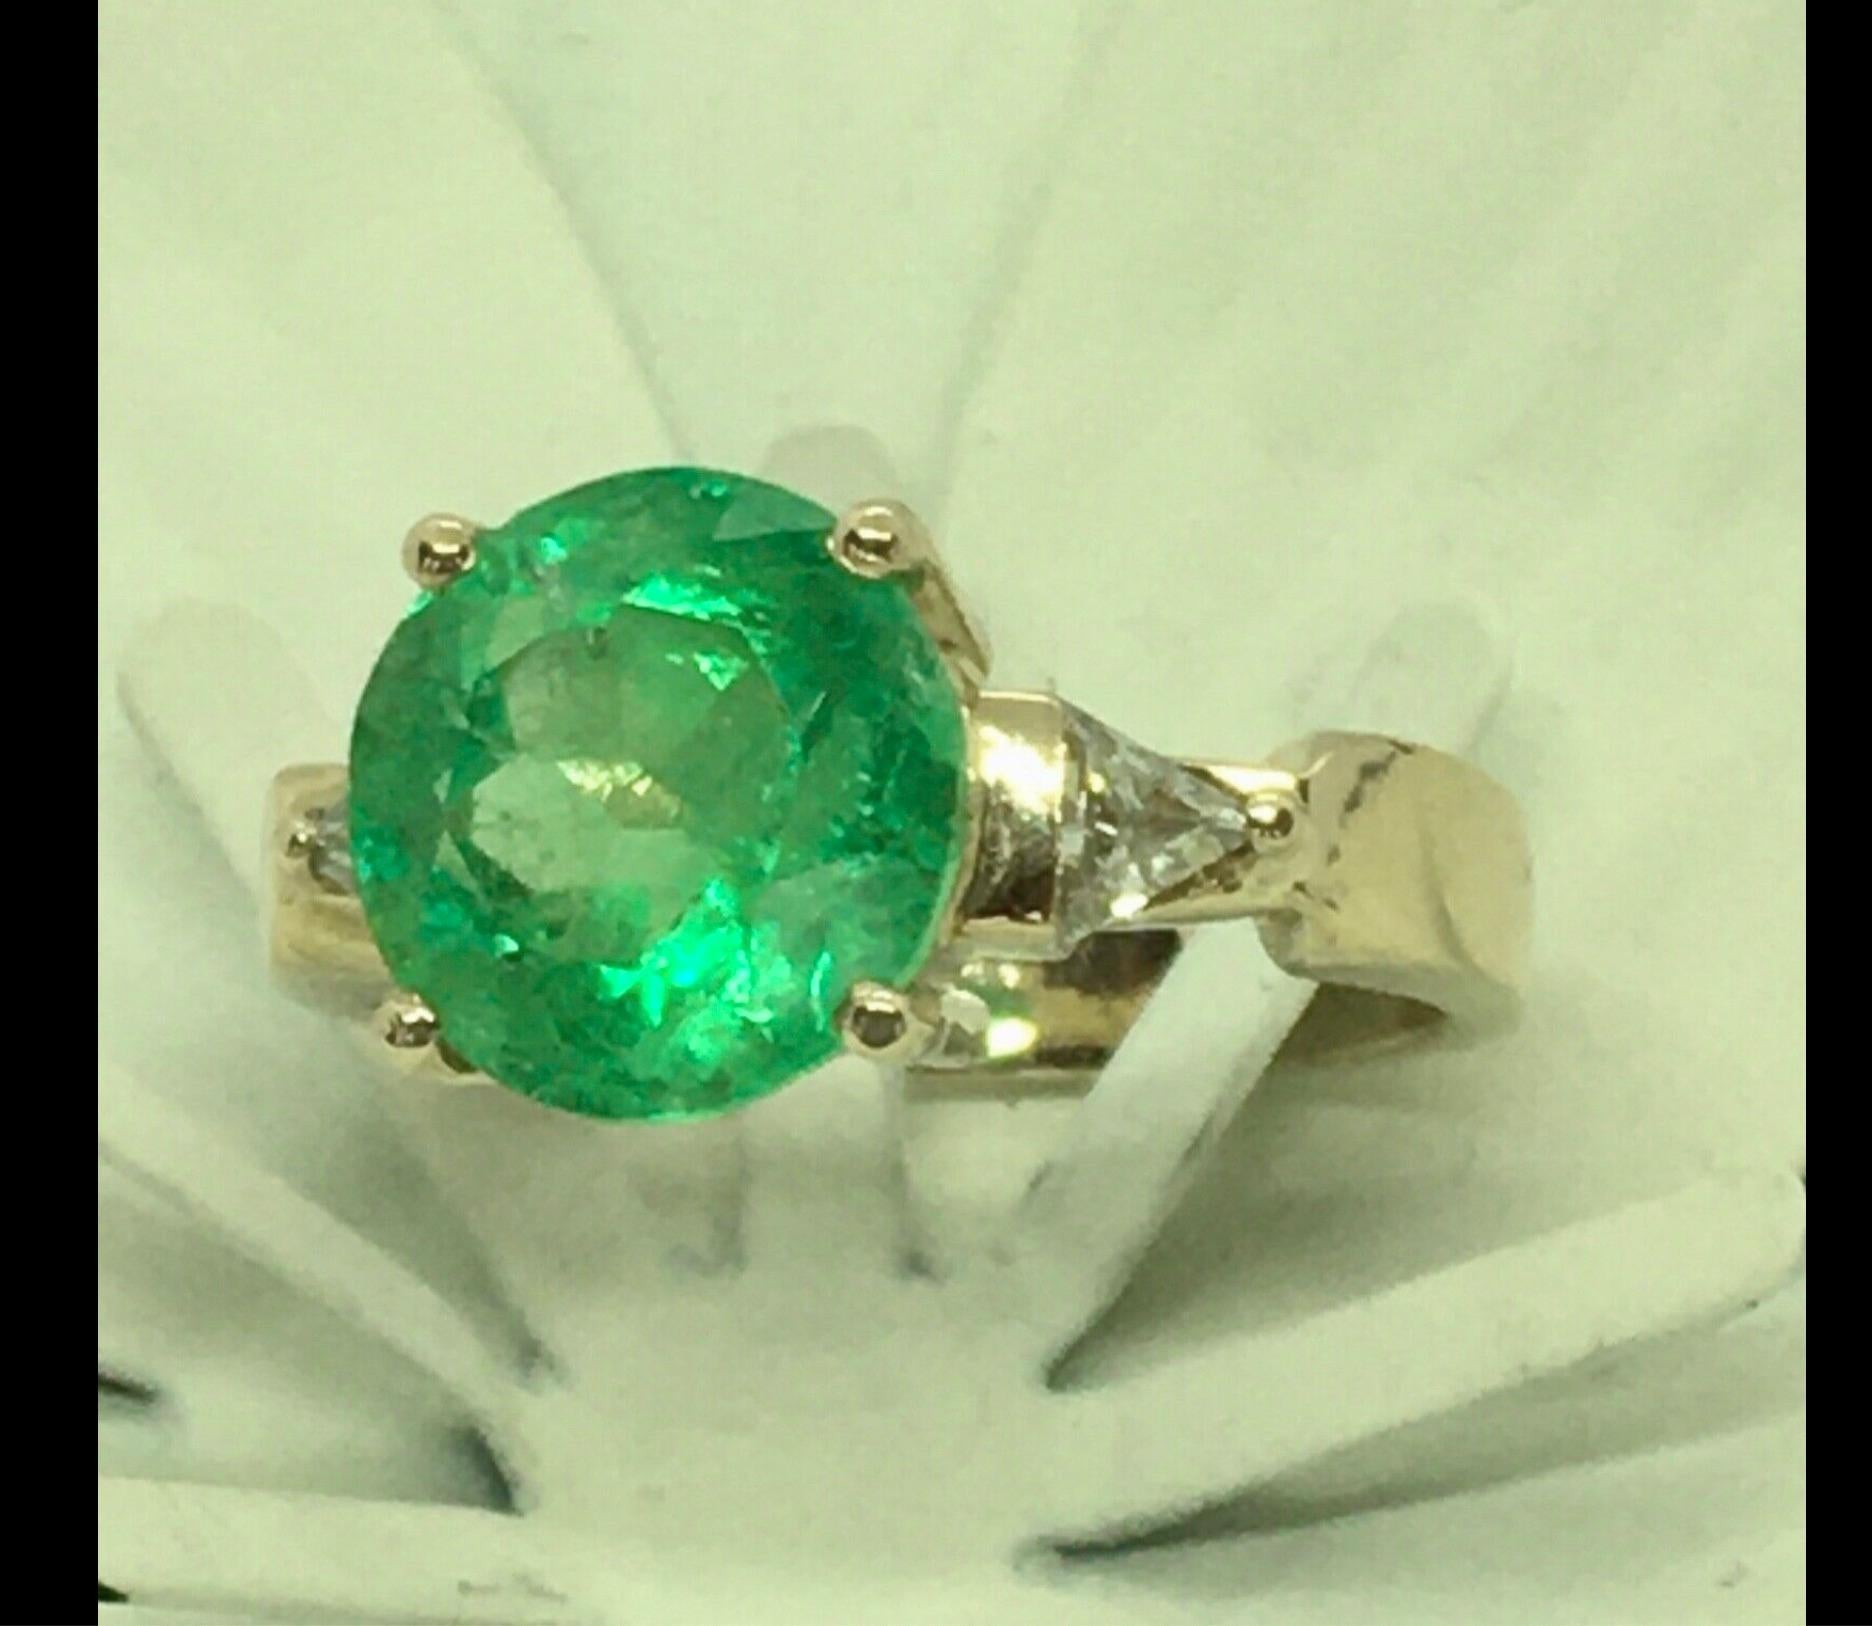 Classic Solitaire Colombian round cut emerald engagement ring diamond accented. 
Center; Fine brilliant natural green Colombian emerald round cut 4.20 carat, measurement 10.40mmX10.40mm. Medium Green/ VS.
Accent Stone: Trillion cut Diamond 0.50